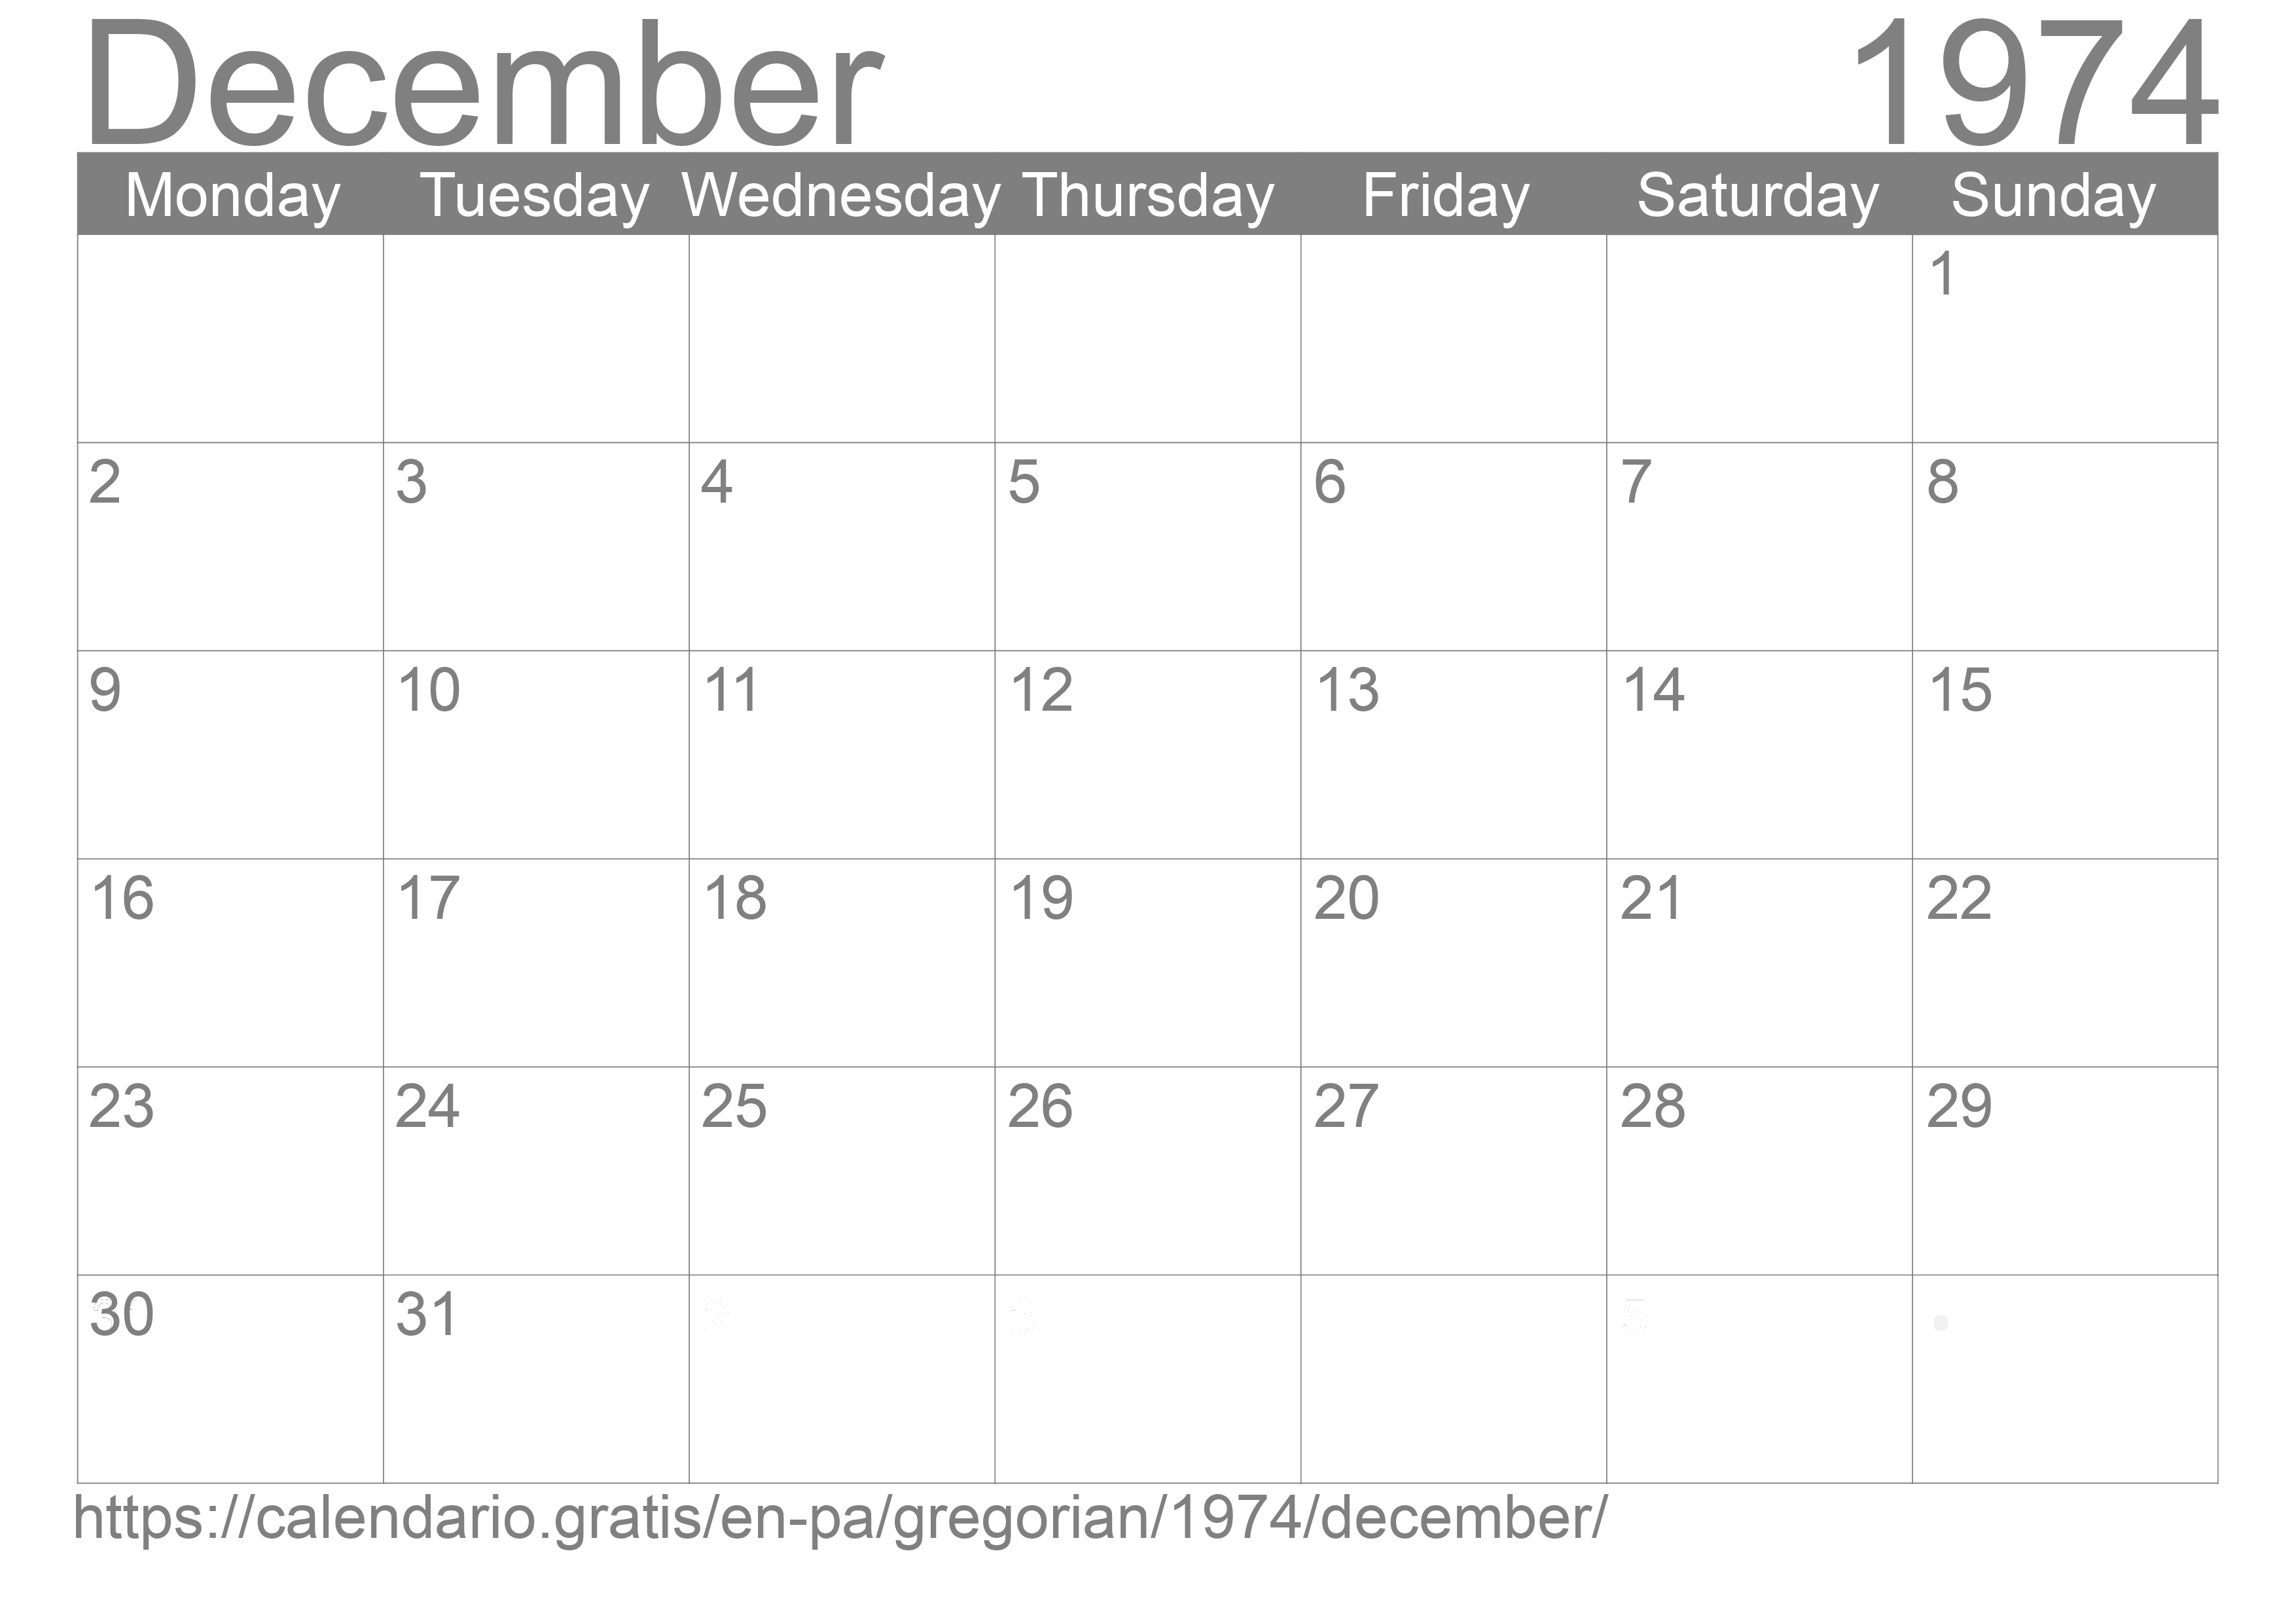 Calendar December 1974 to print